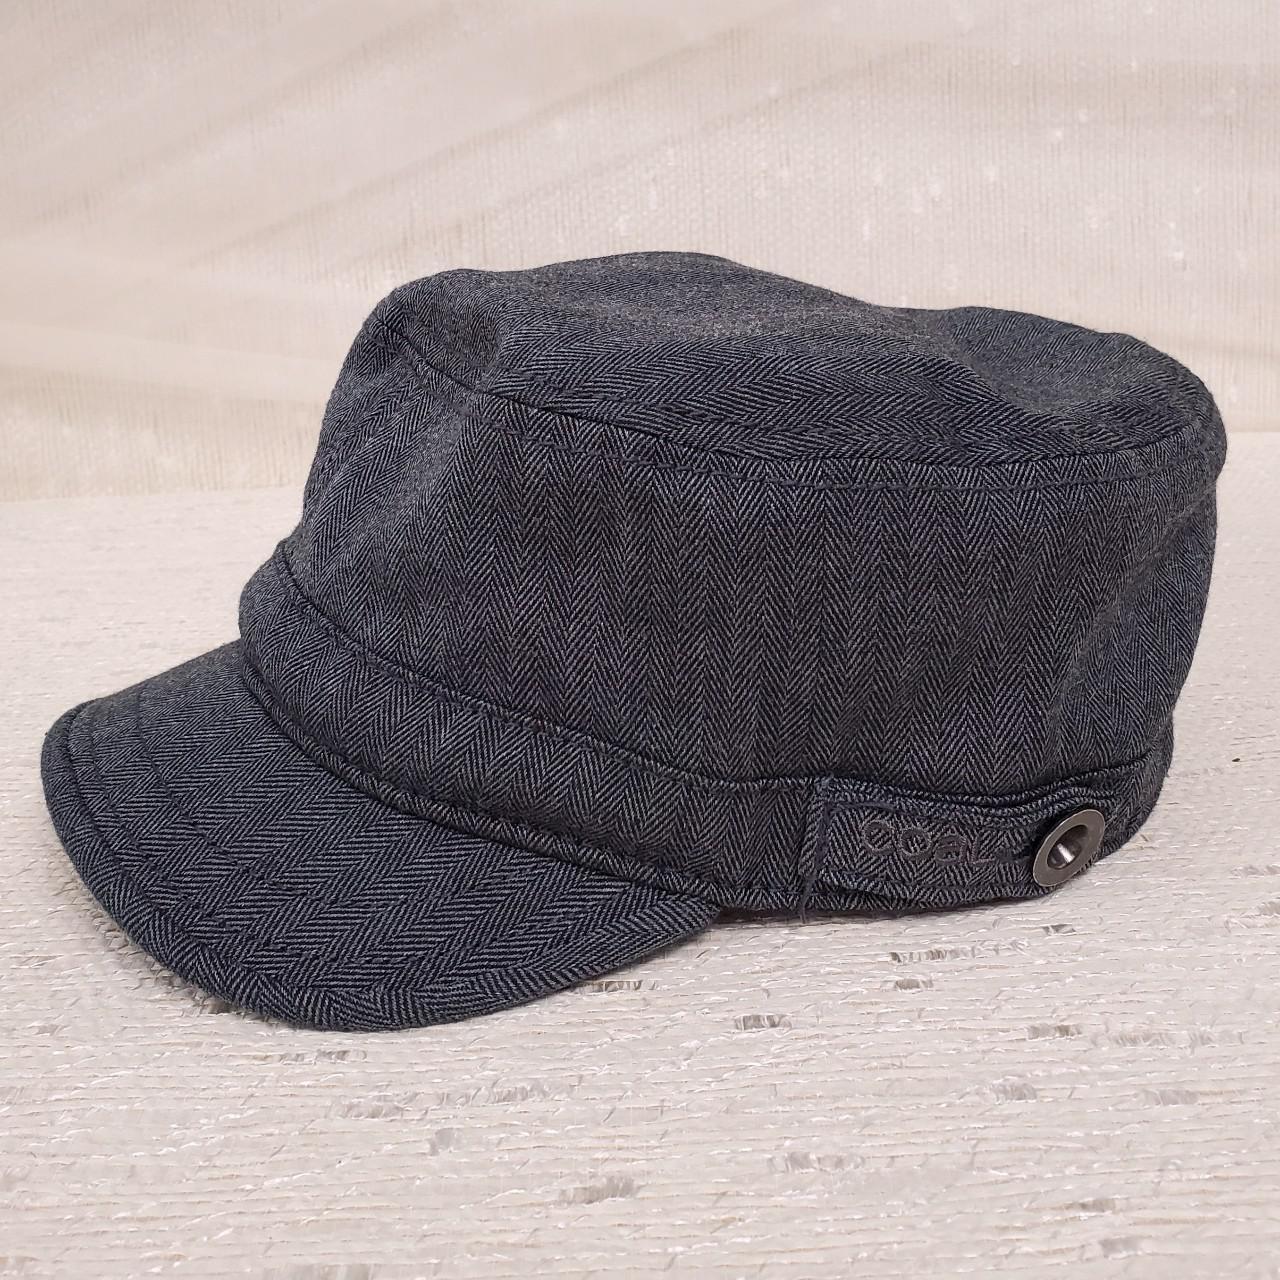 Product Image 1 - Y2k gray newsboy hat

Coal Headwear